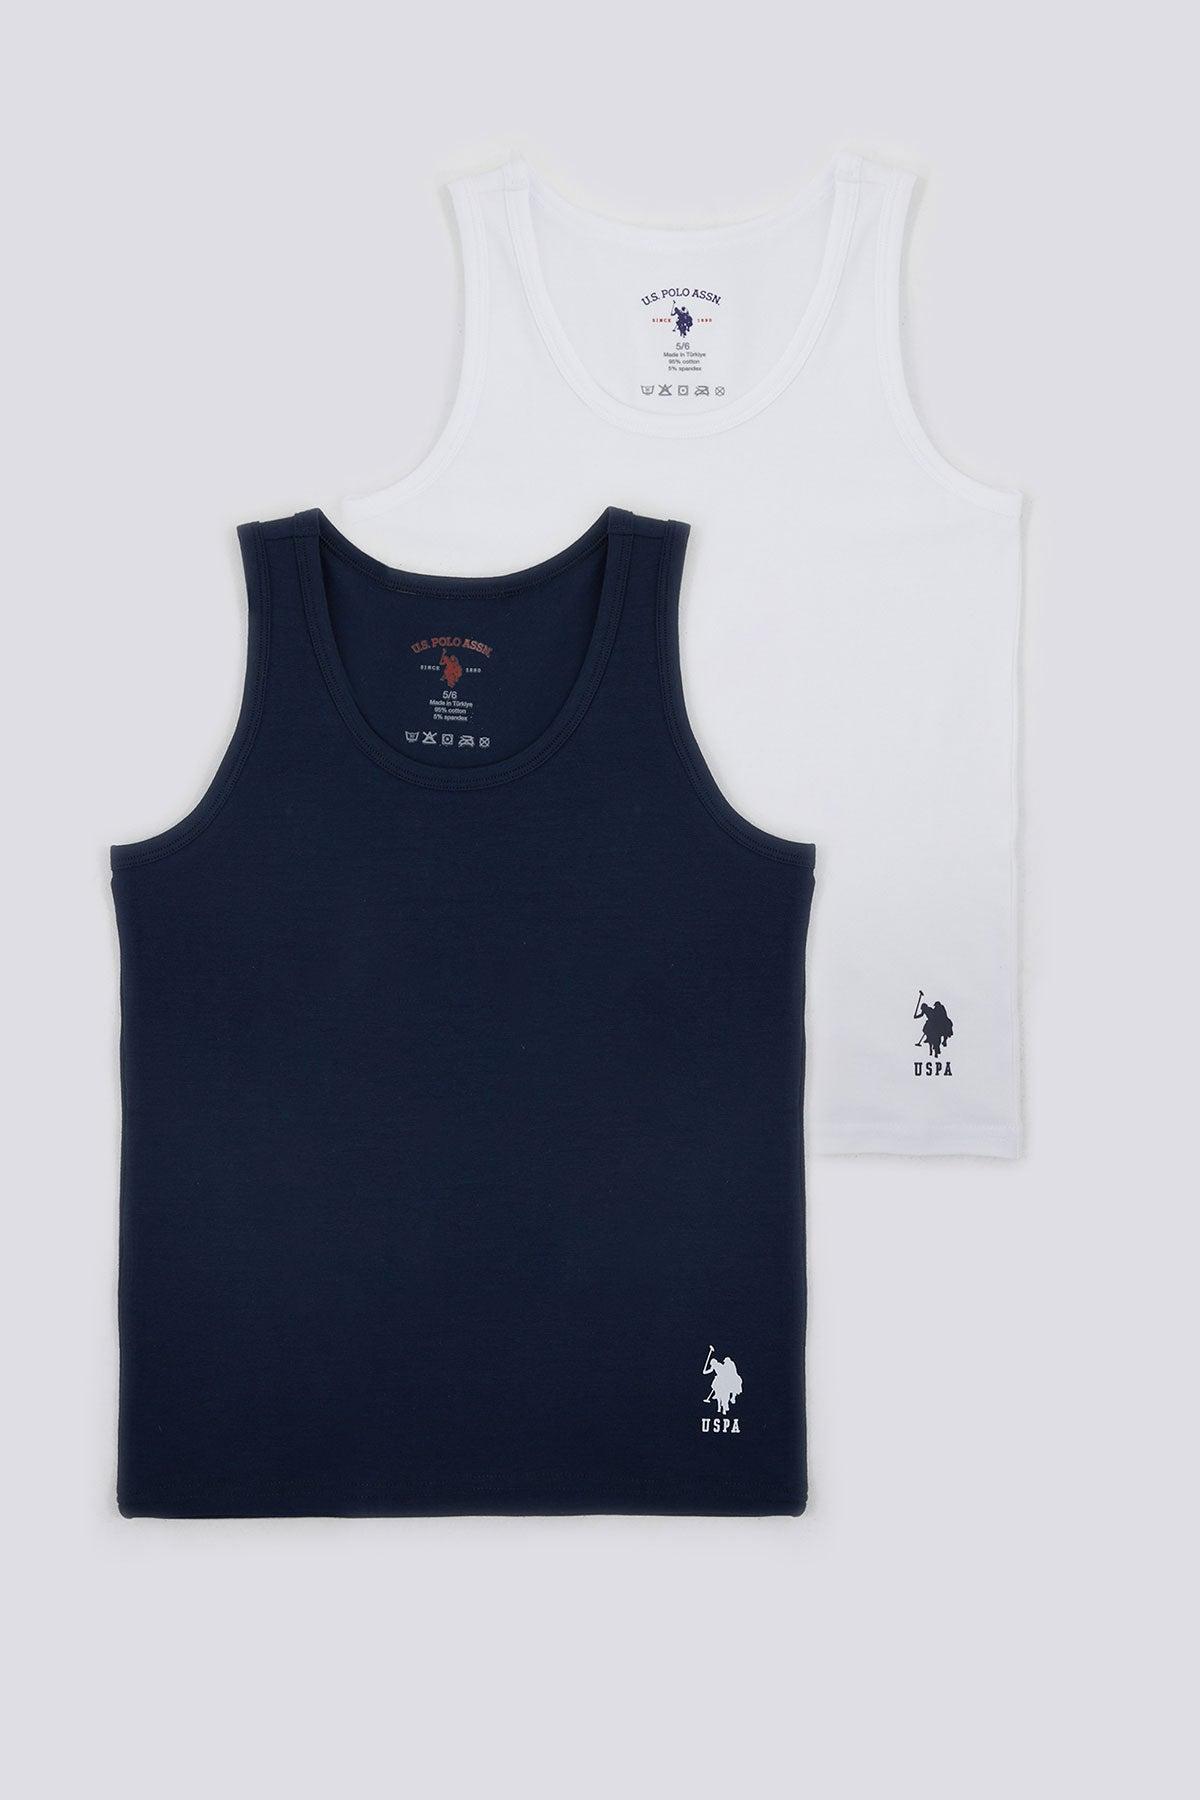 Selected image for U.S. Polo Assn. Set majica za dečake US1380, 2 komada, Teget i bela